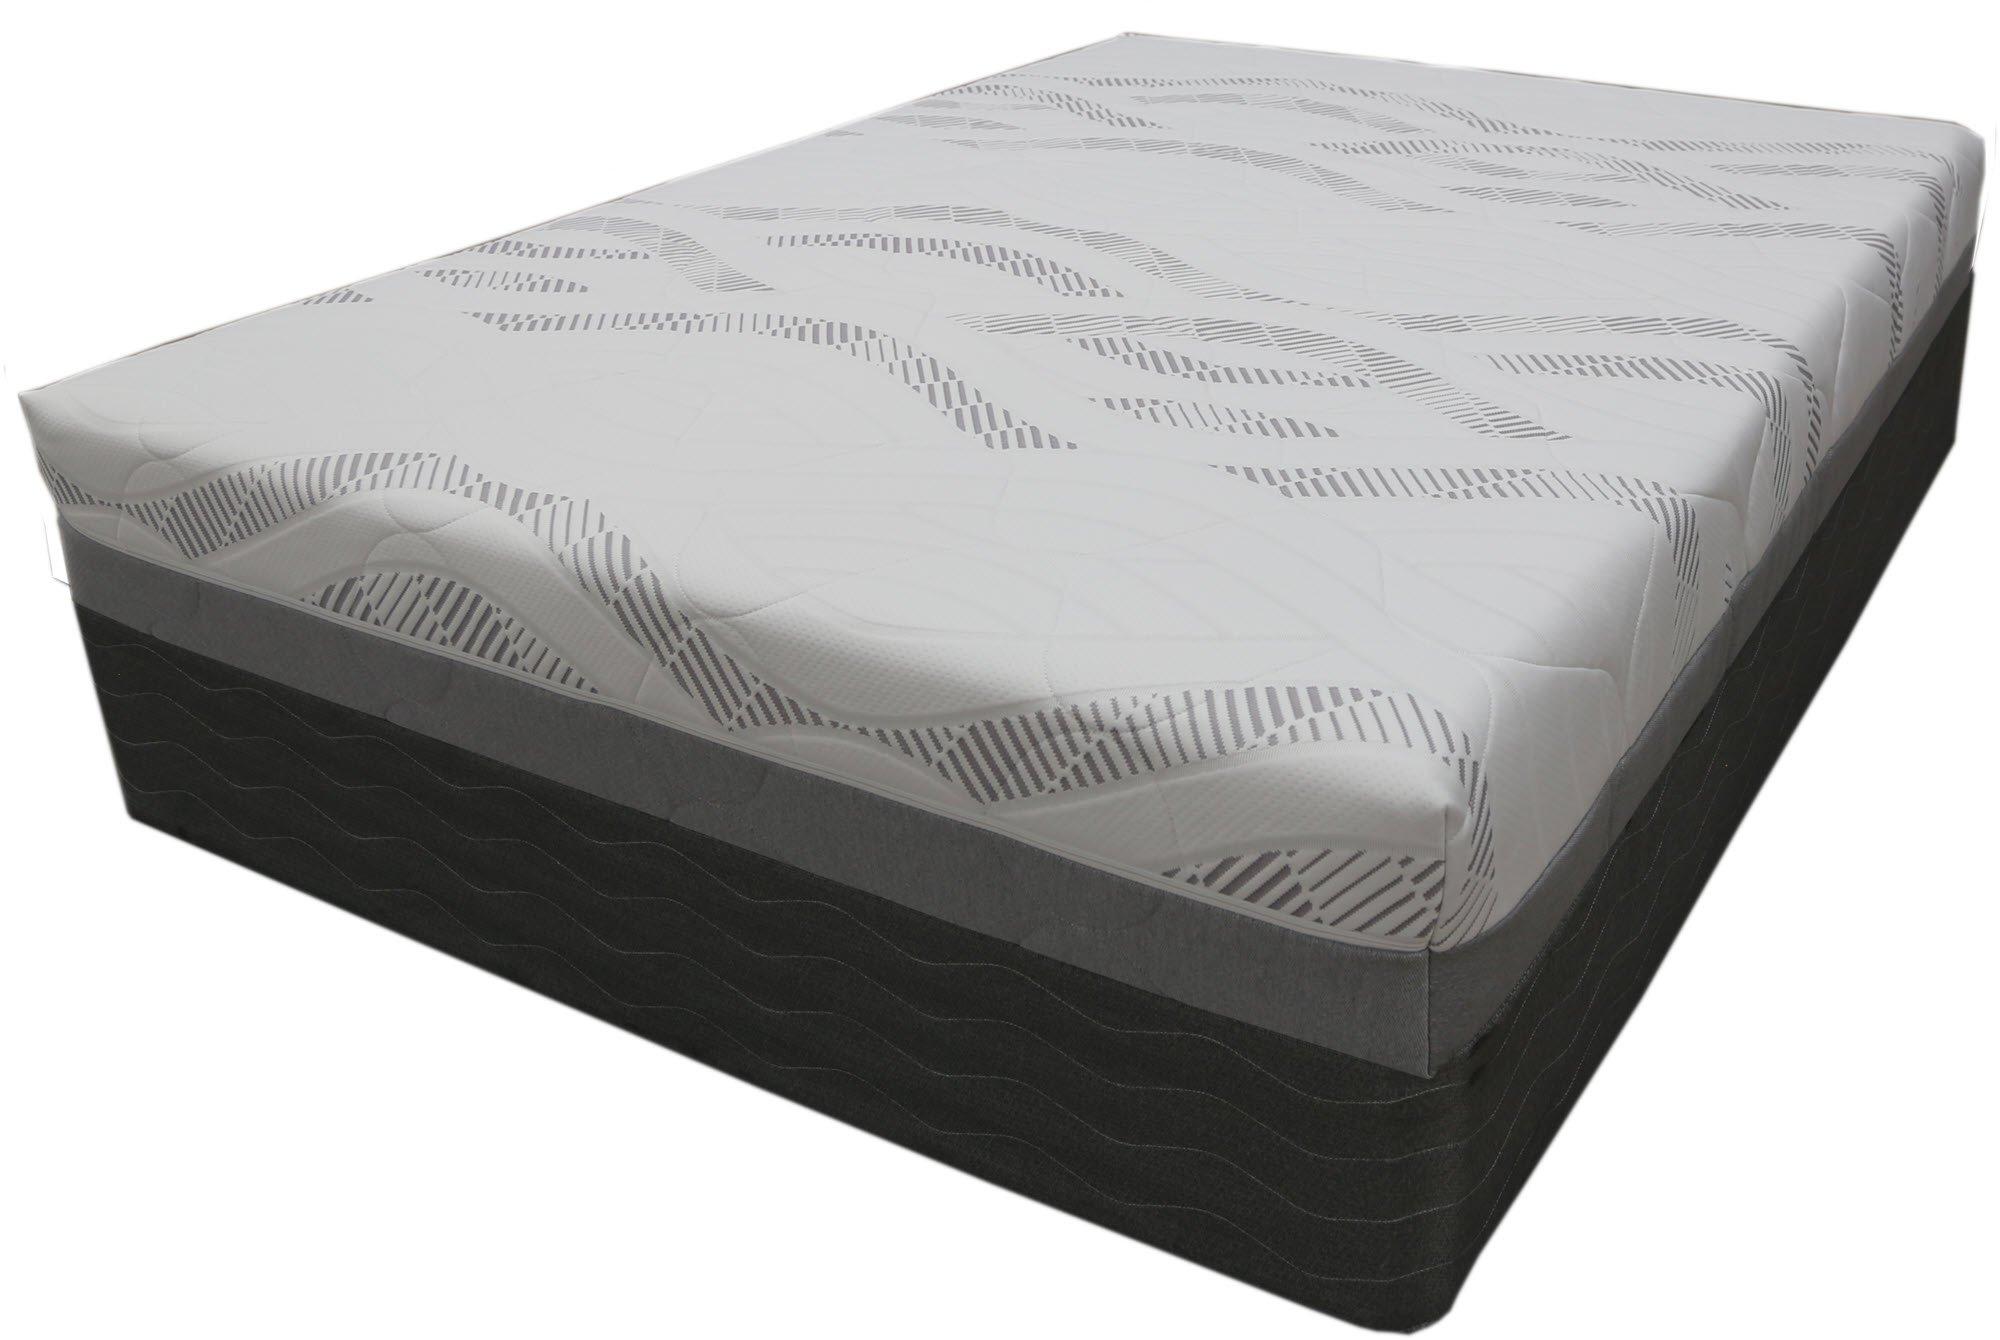 aarons woodhaven mattress reviews